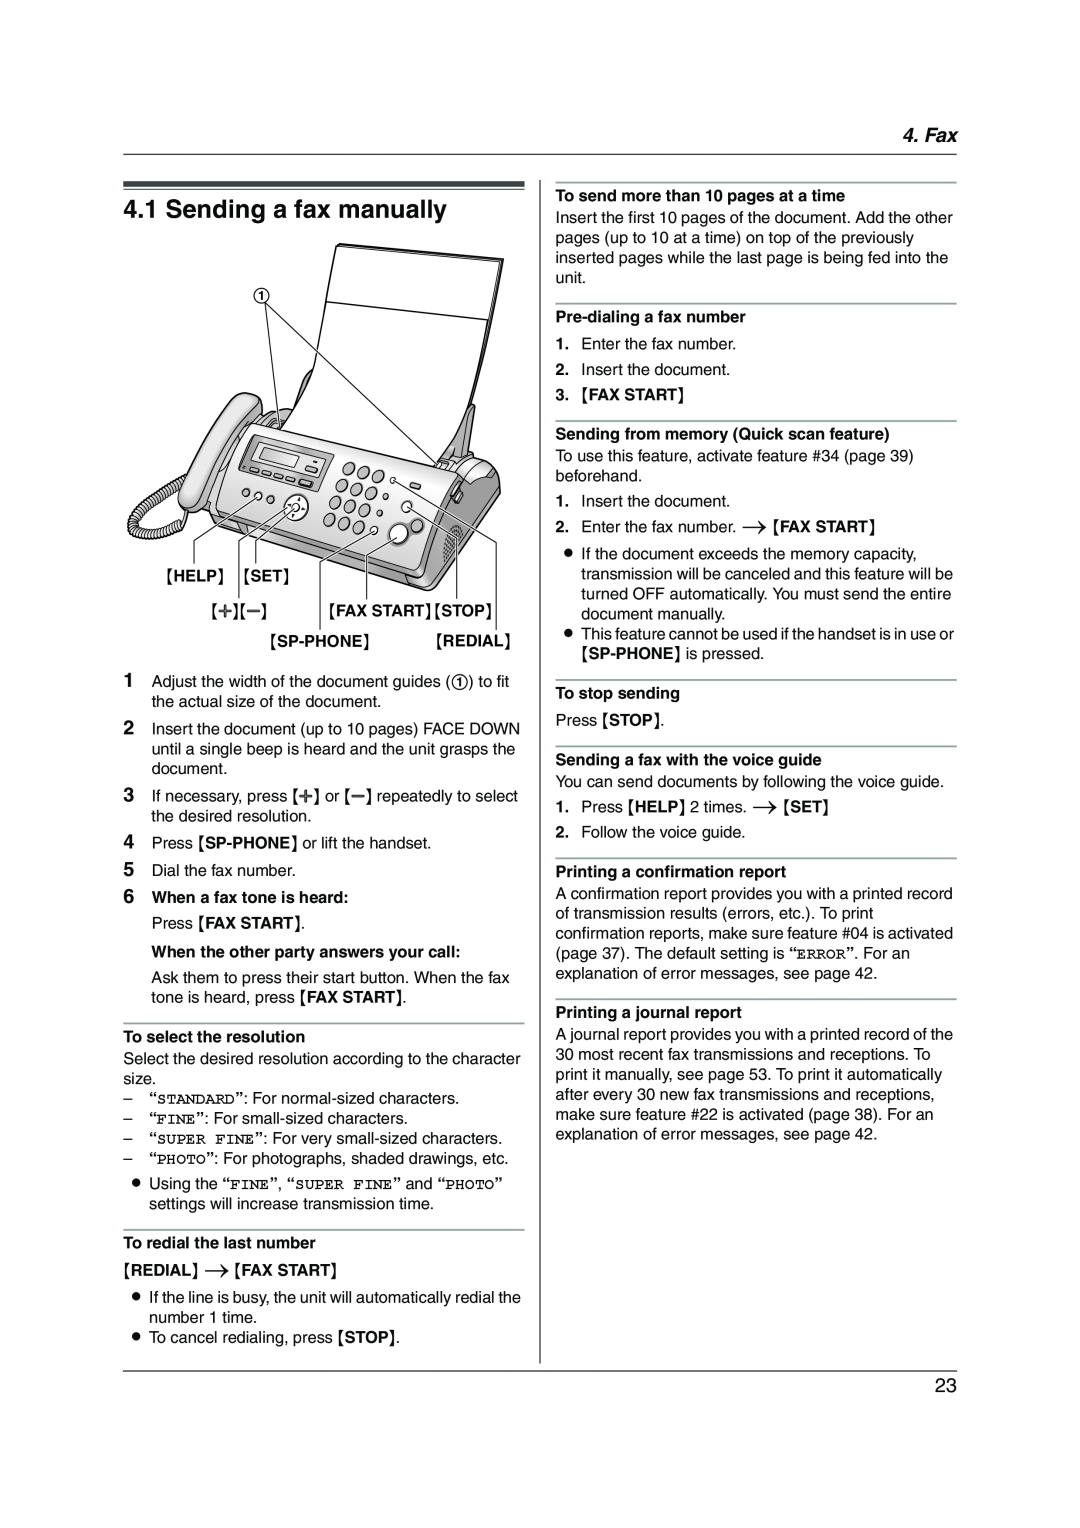 Panasonic KX-FP215 operating instructions Sending a fax manually, Fax 